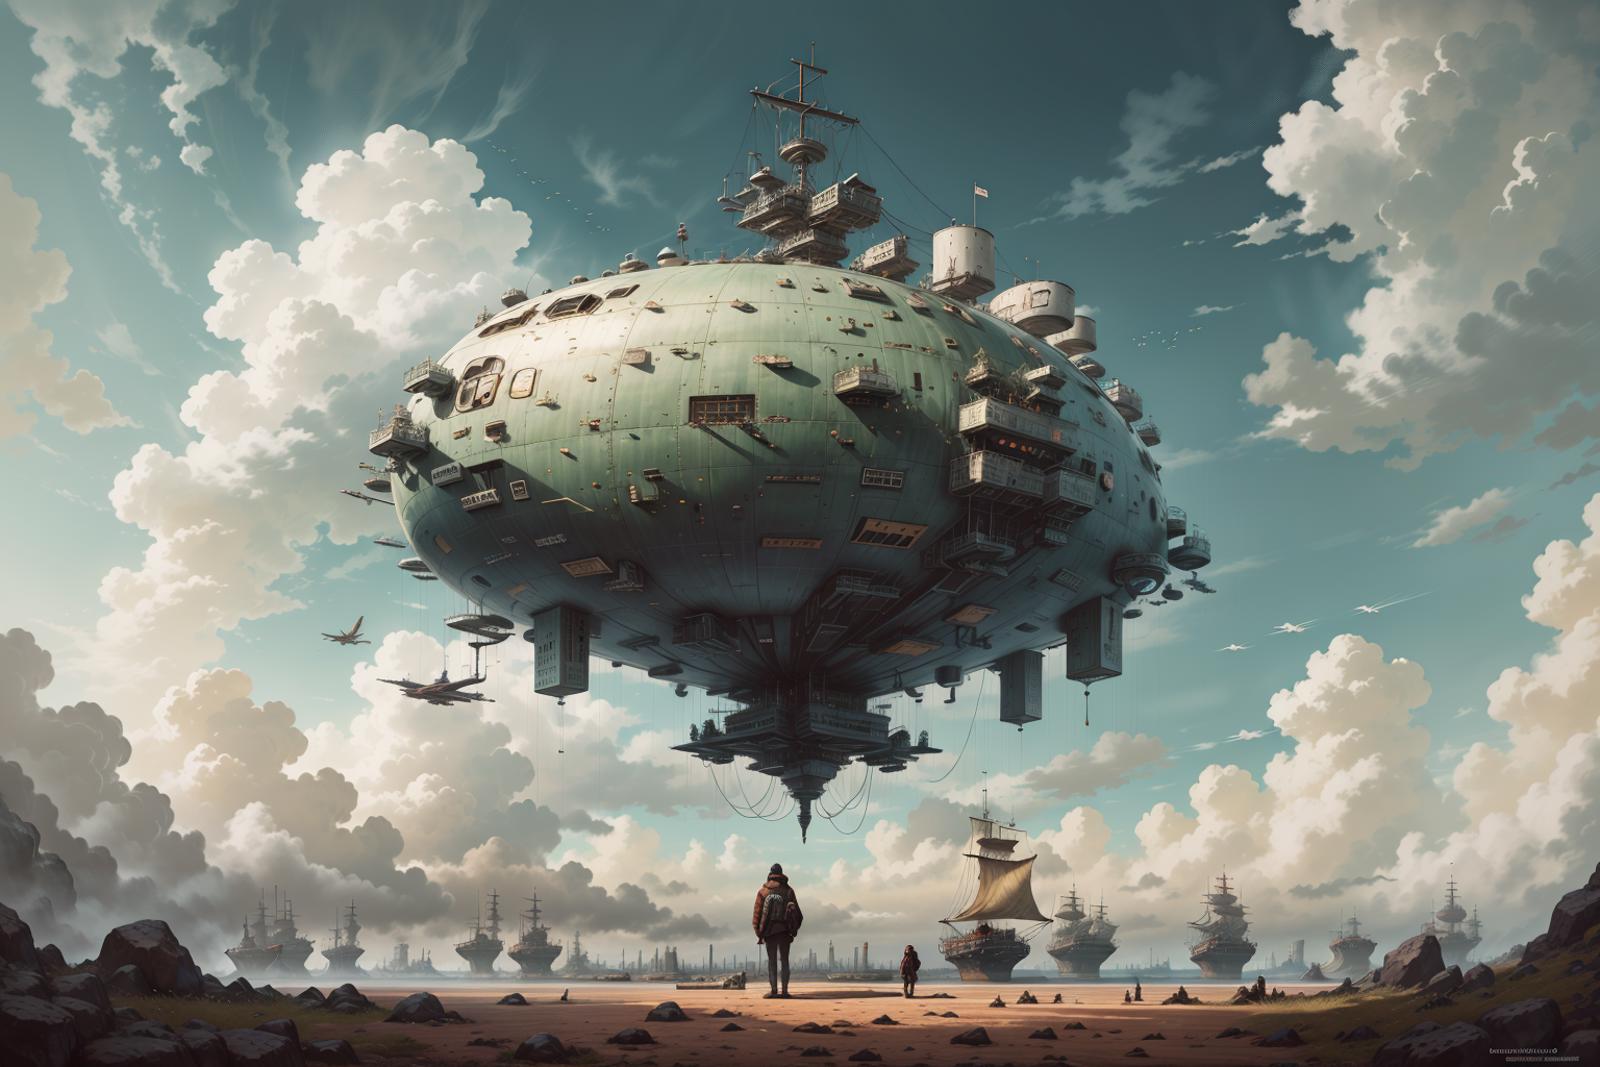  巨大飞空艇  Giant airship image by Lulu_K